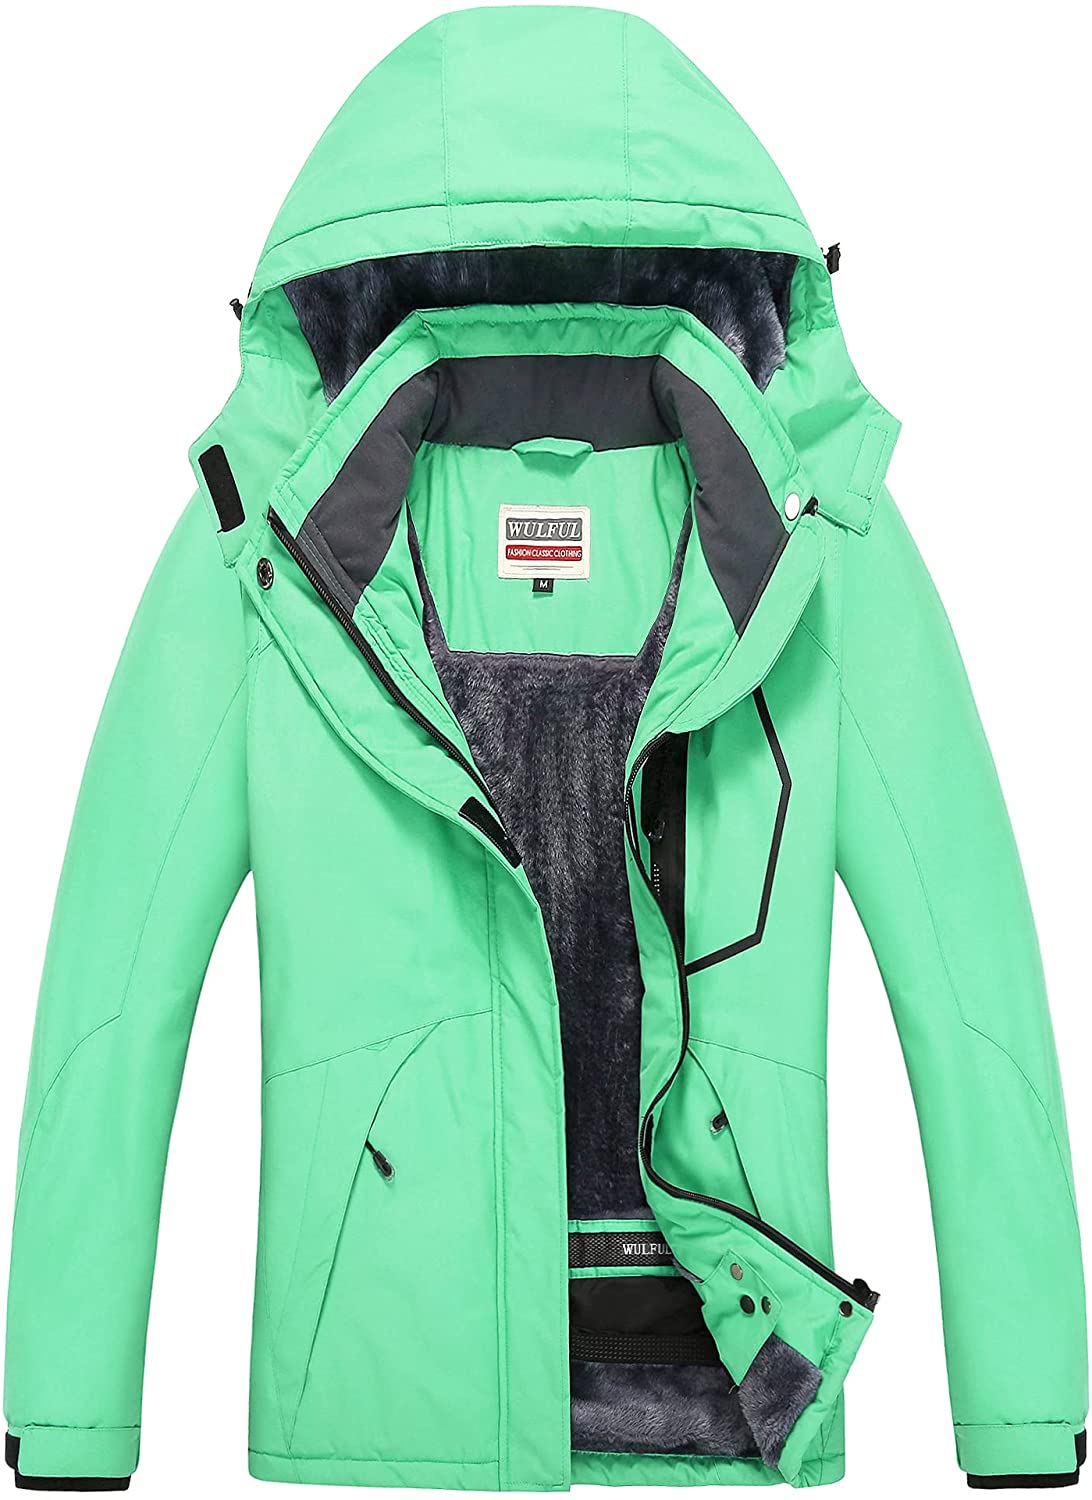 WULFUL Women’s Waterproof Snow Ski Jacket Mountain Windproof Winter Coat with Detachable Hood Pink Camo Medium